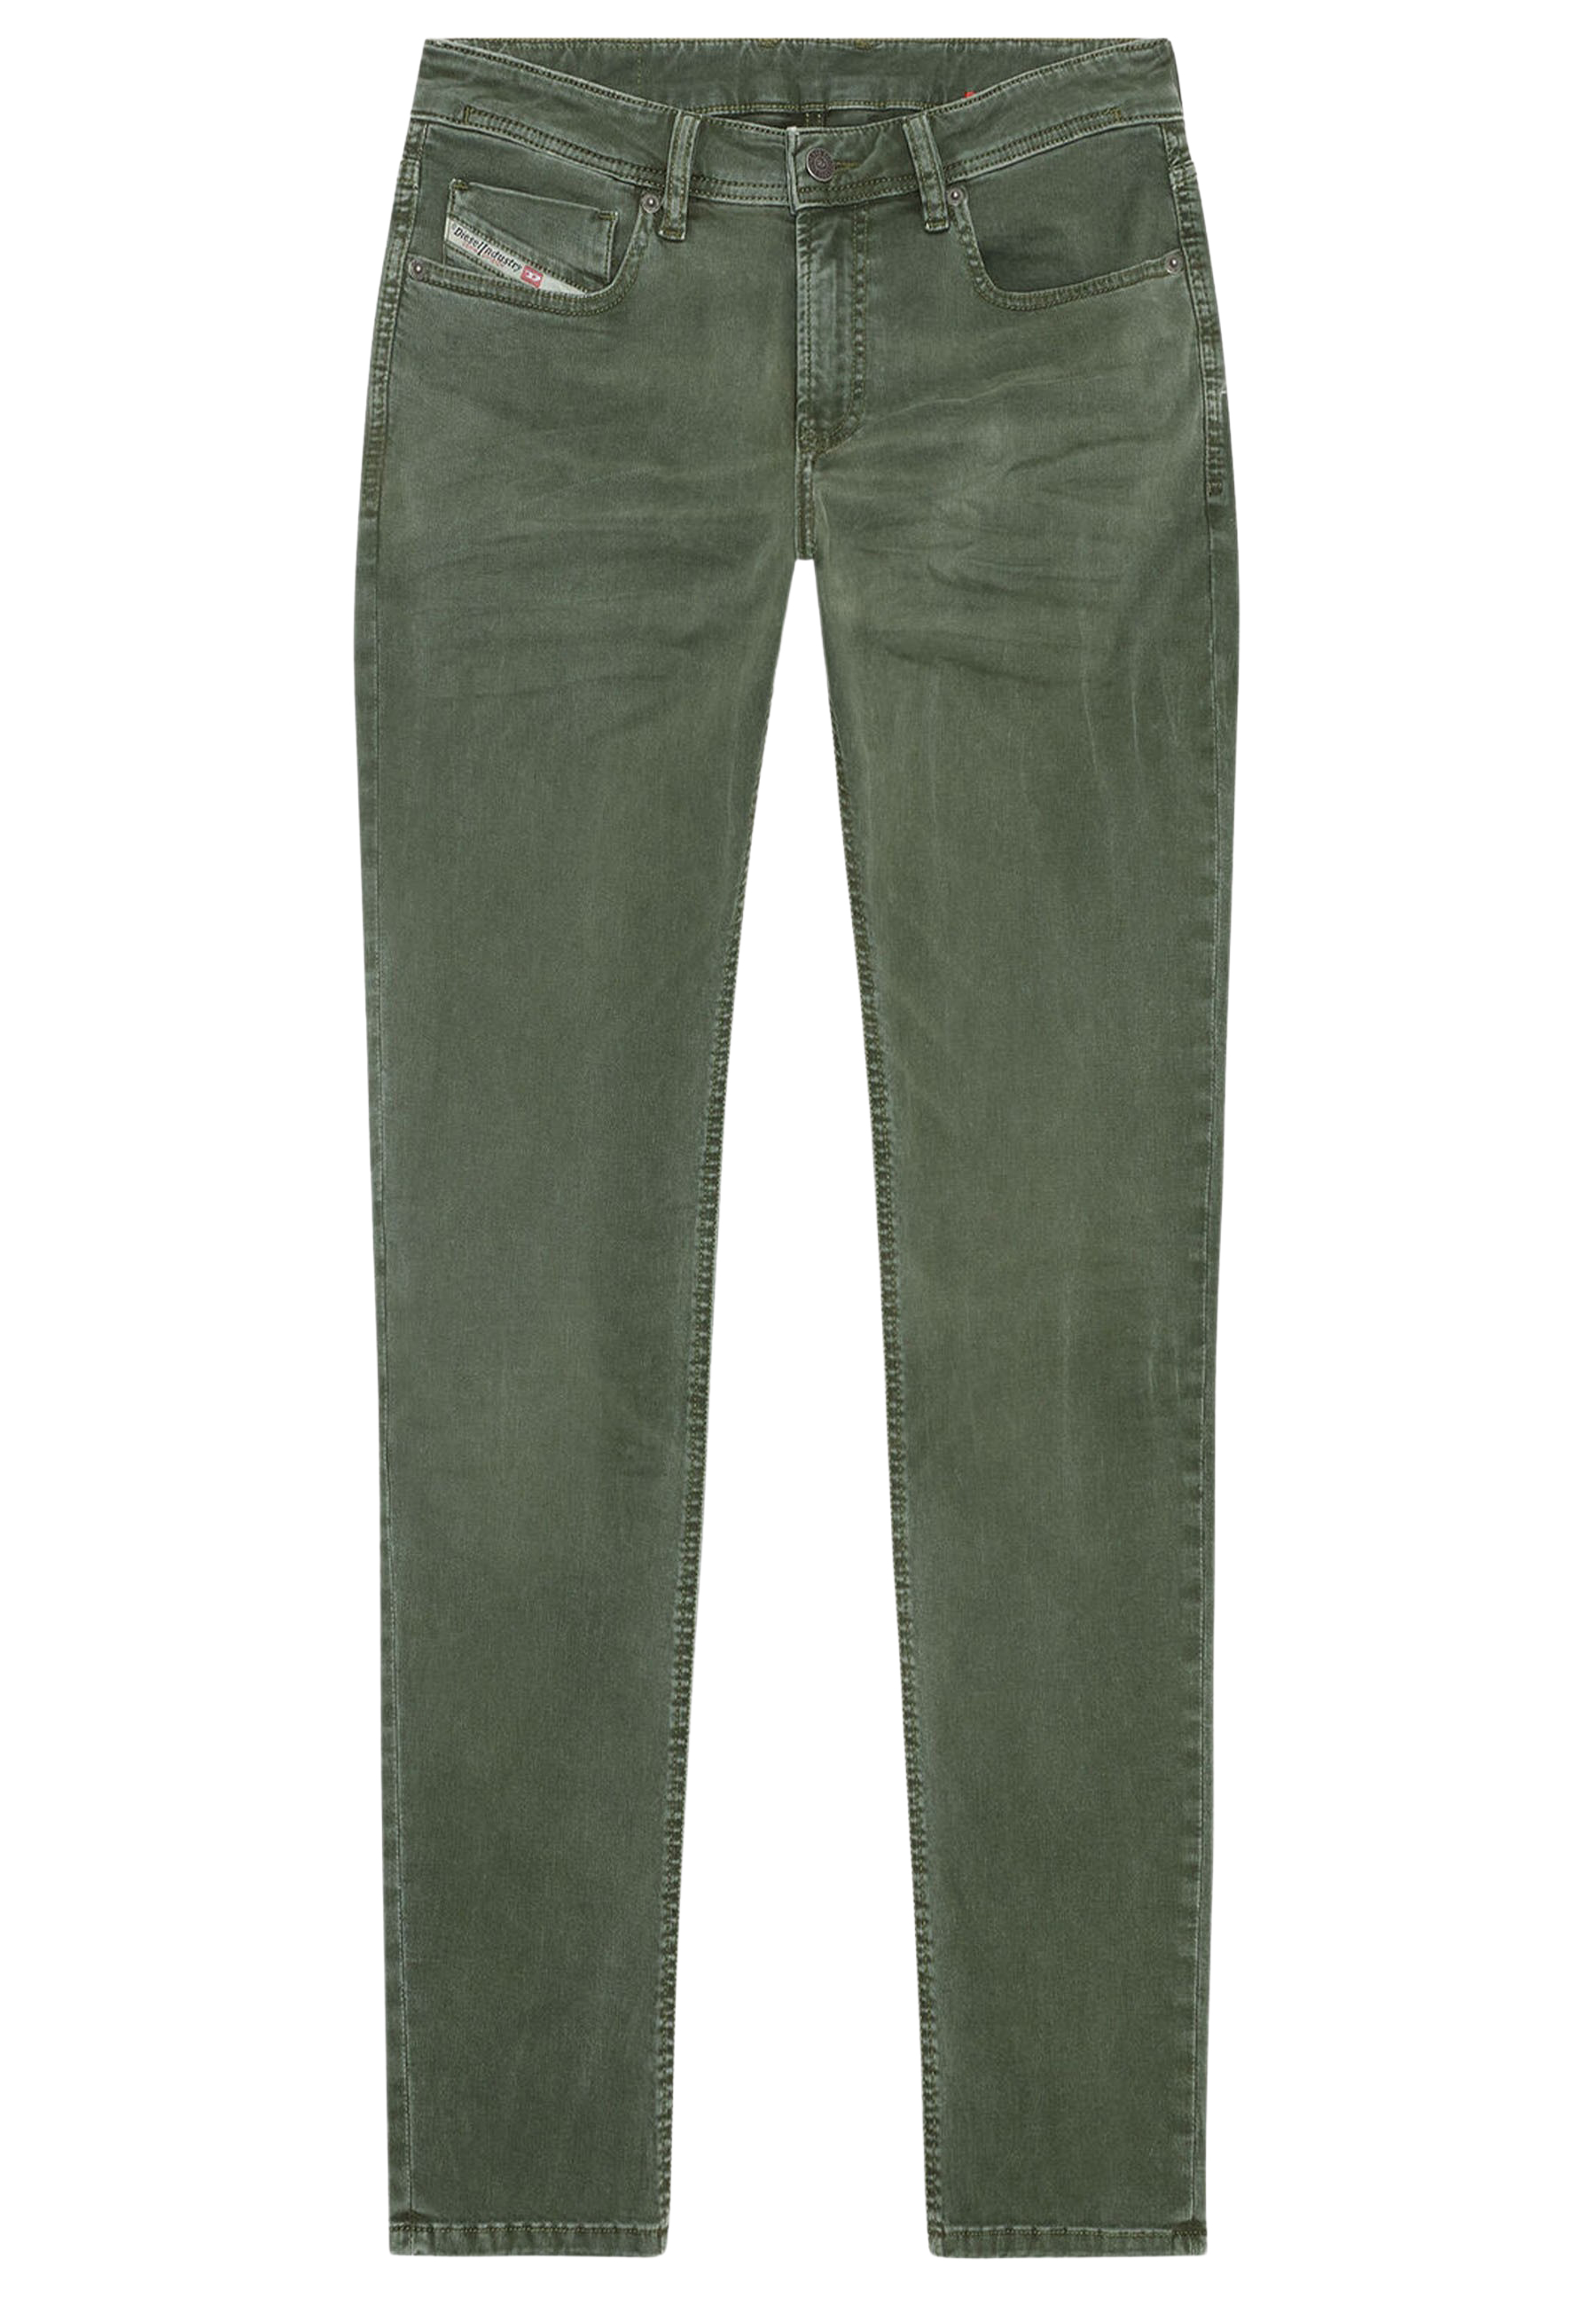 Diesel jeans groen Heren maat 29/32